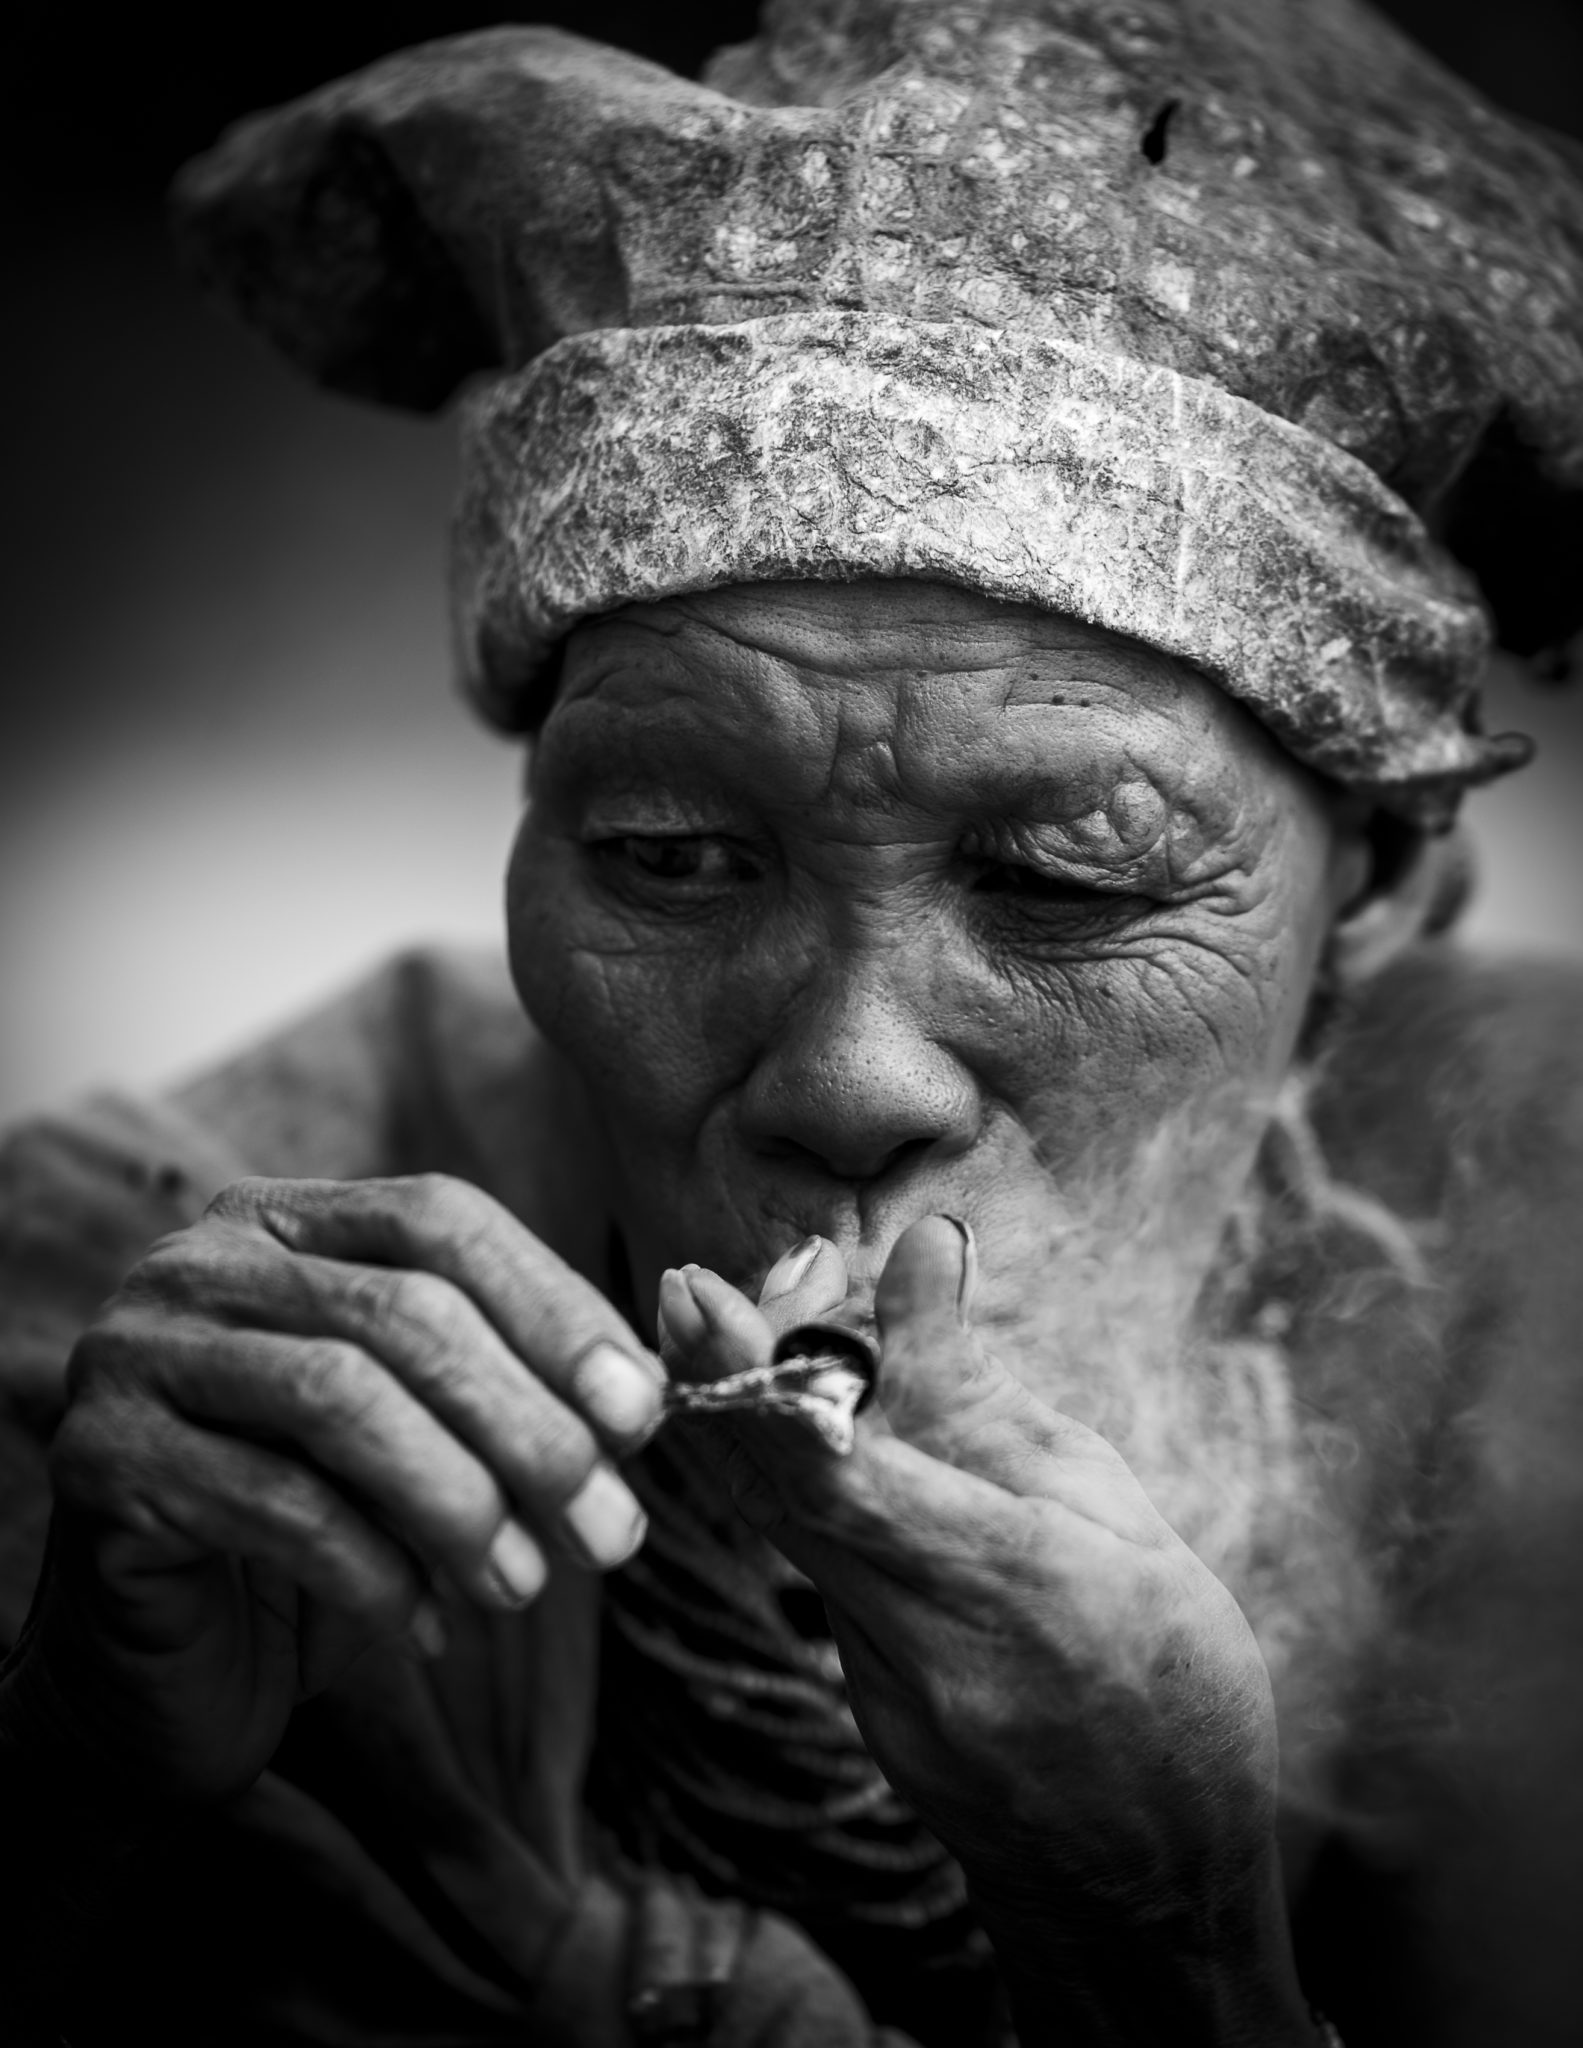 The smoking San – Namibia